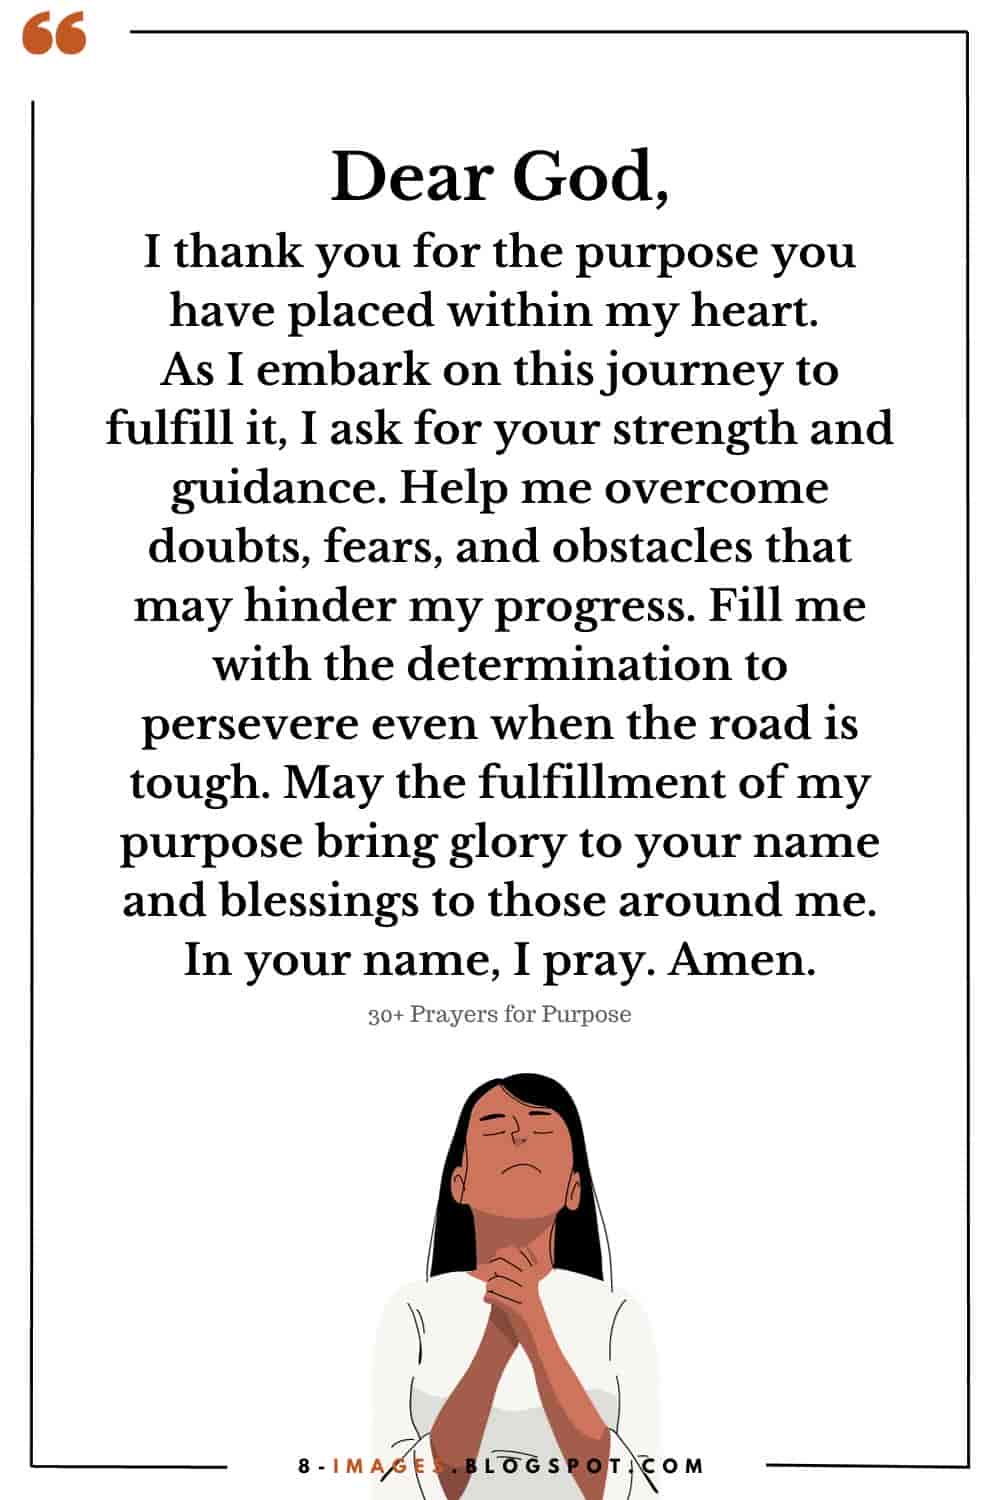 Prayer for Purpose